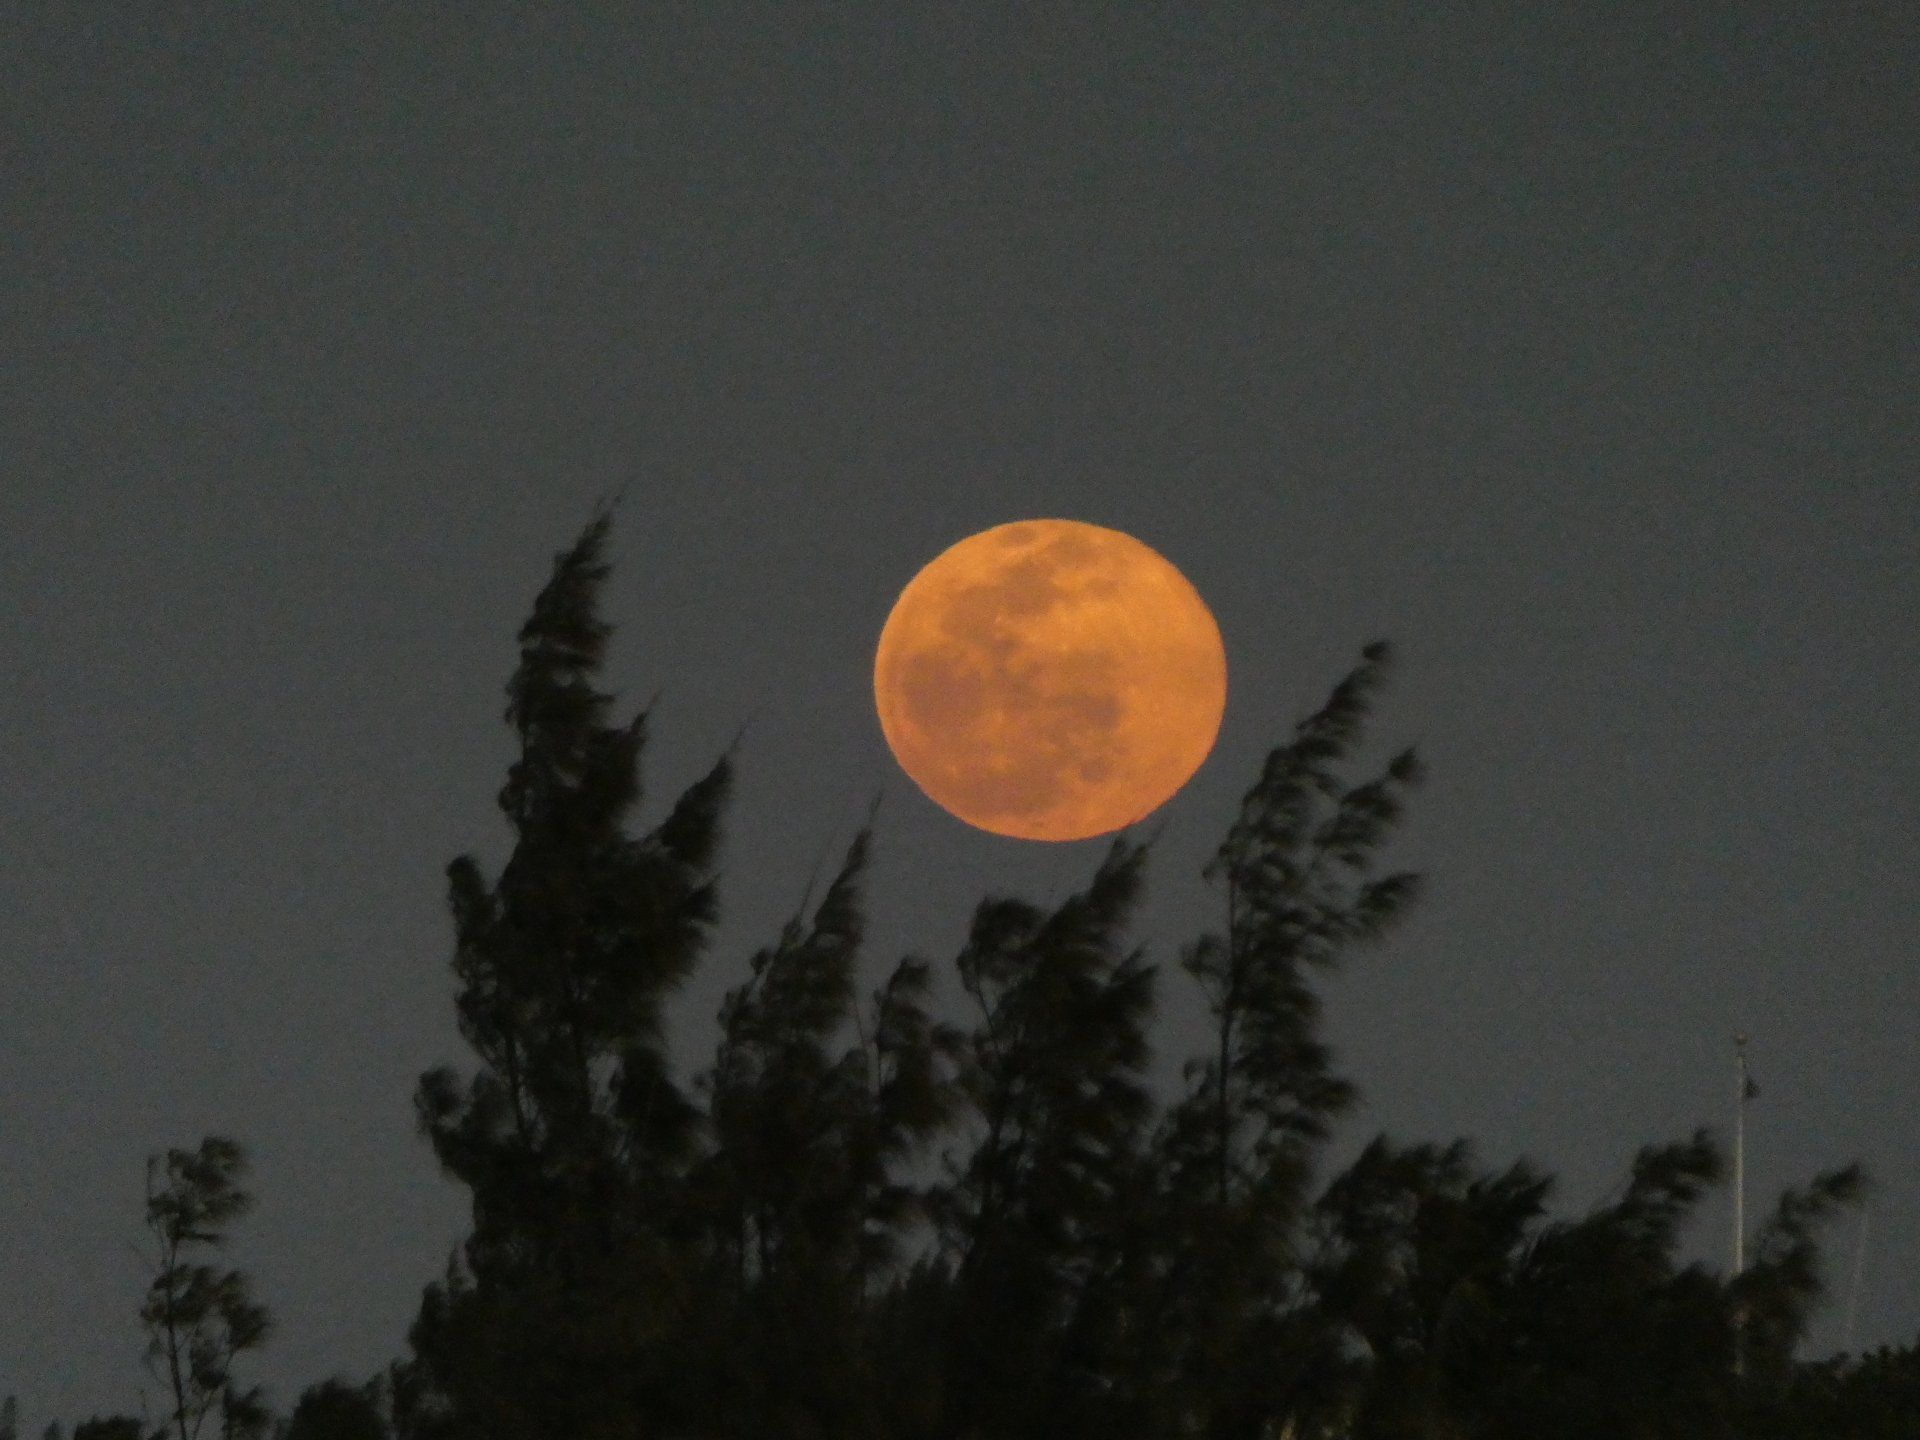 night orange moon over trees